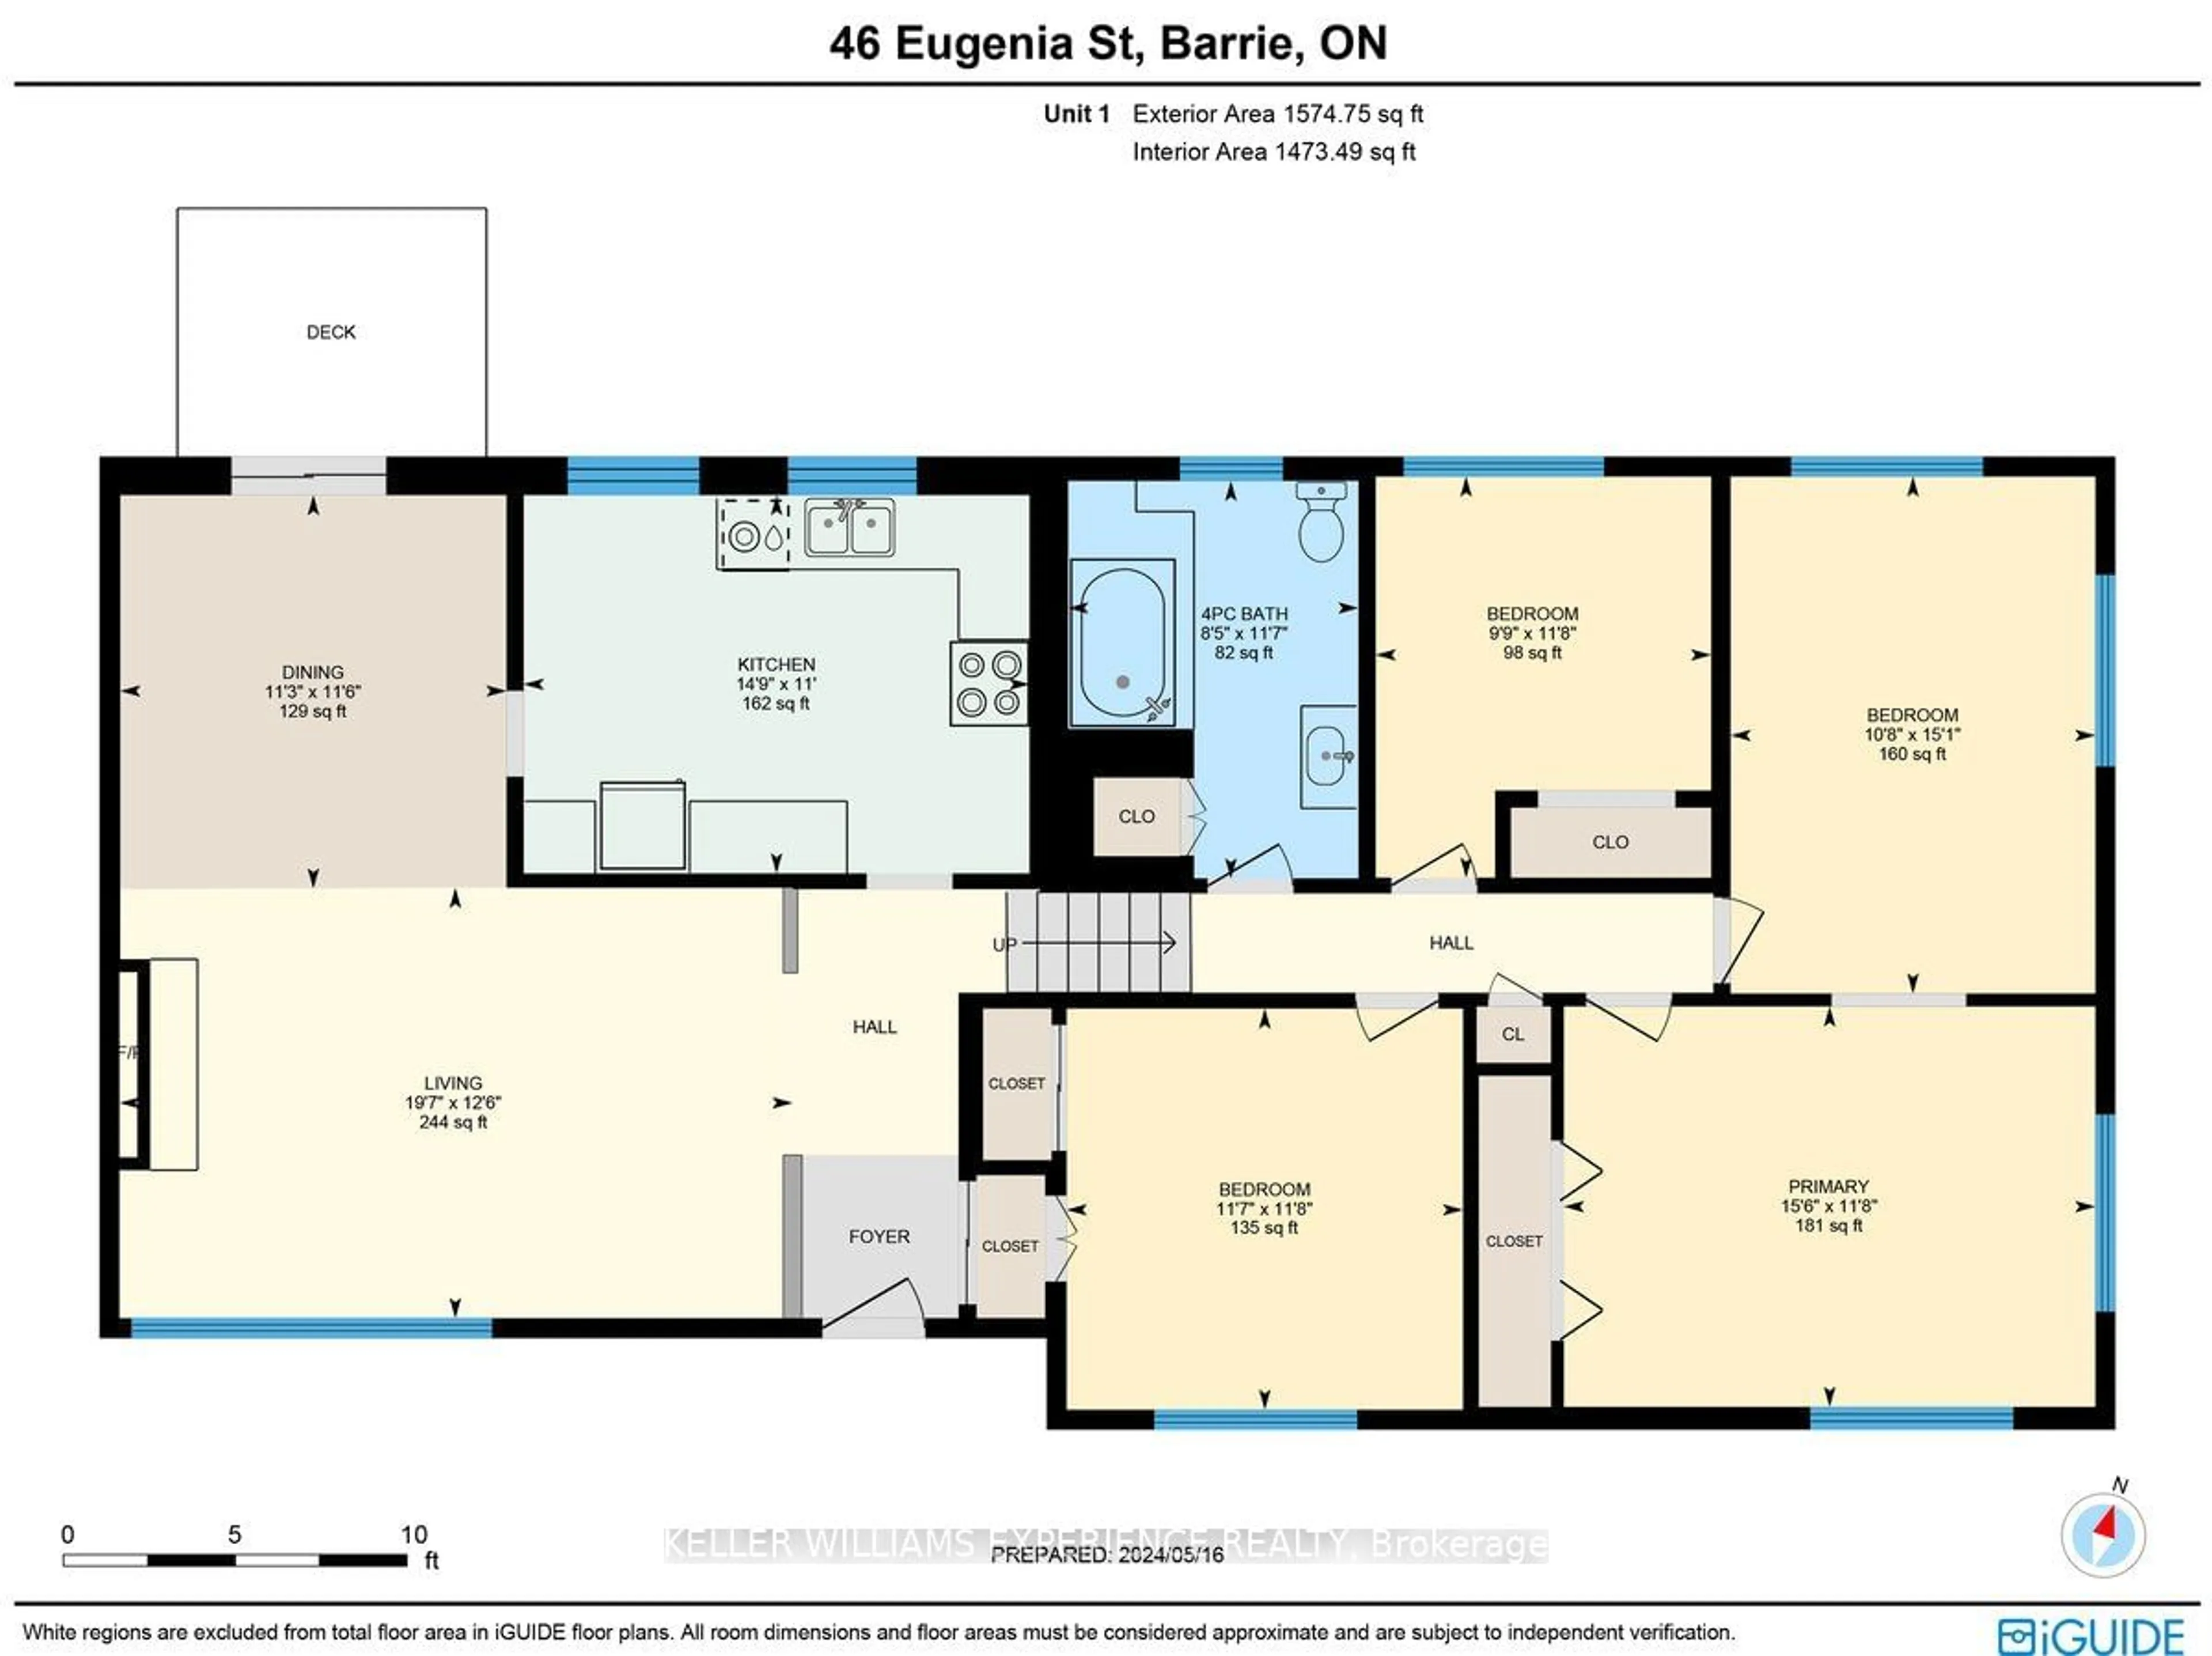 Floor plan for 46 Eugenia St, Barrie Ontario L4M 1P8